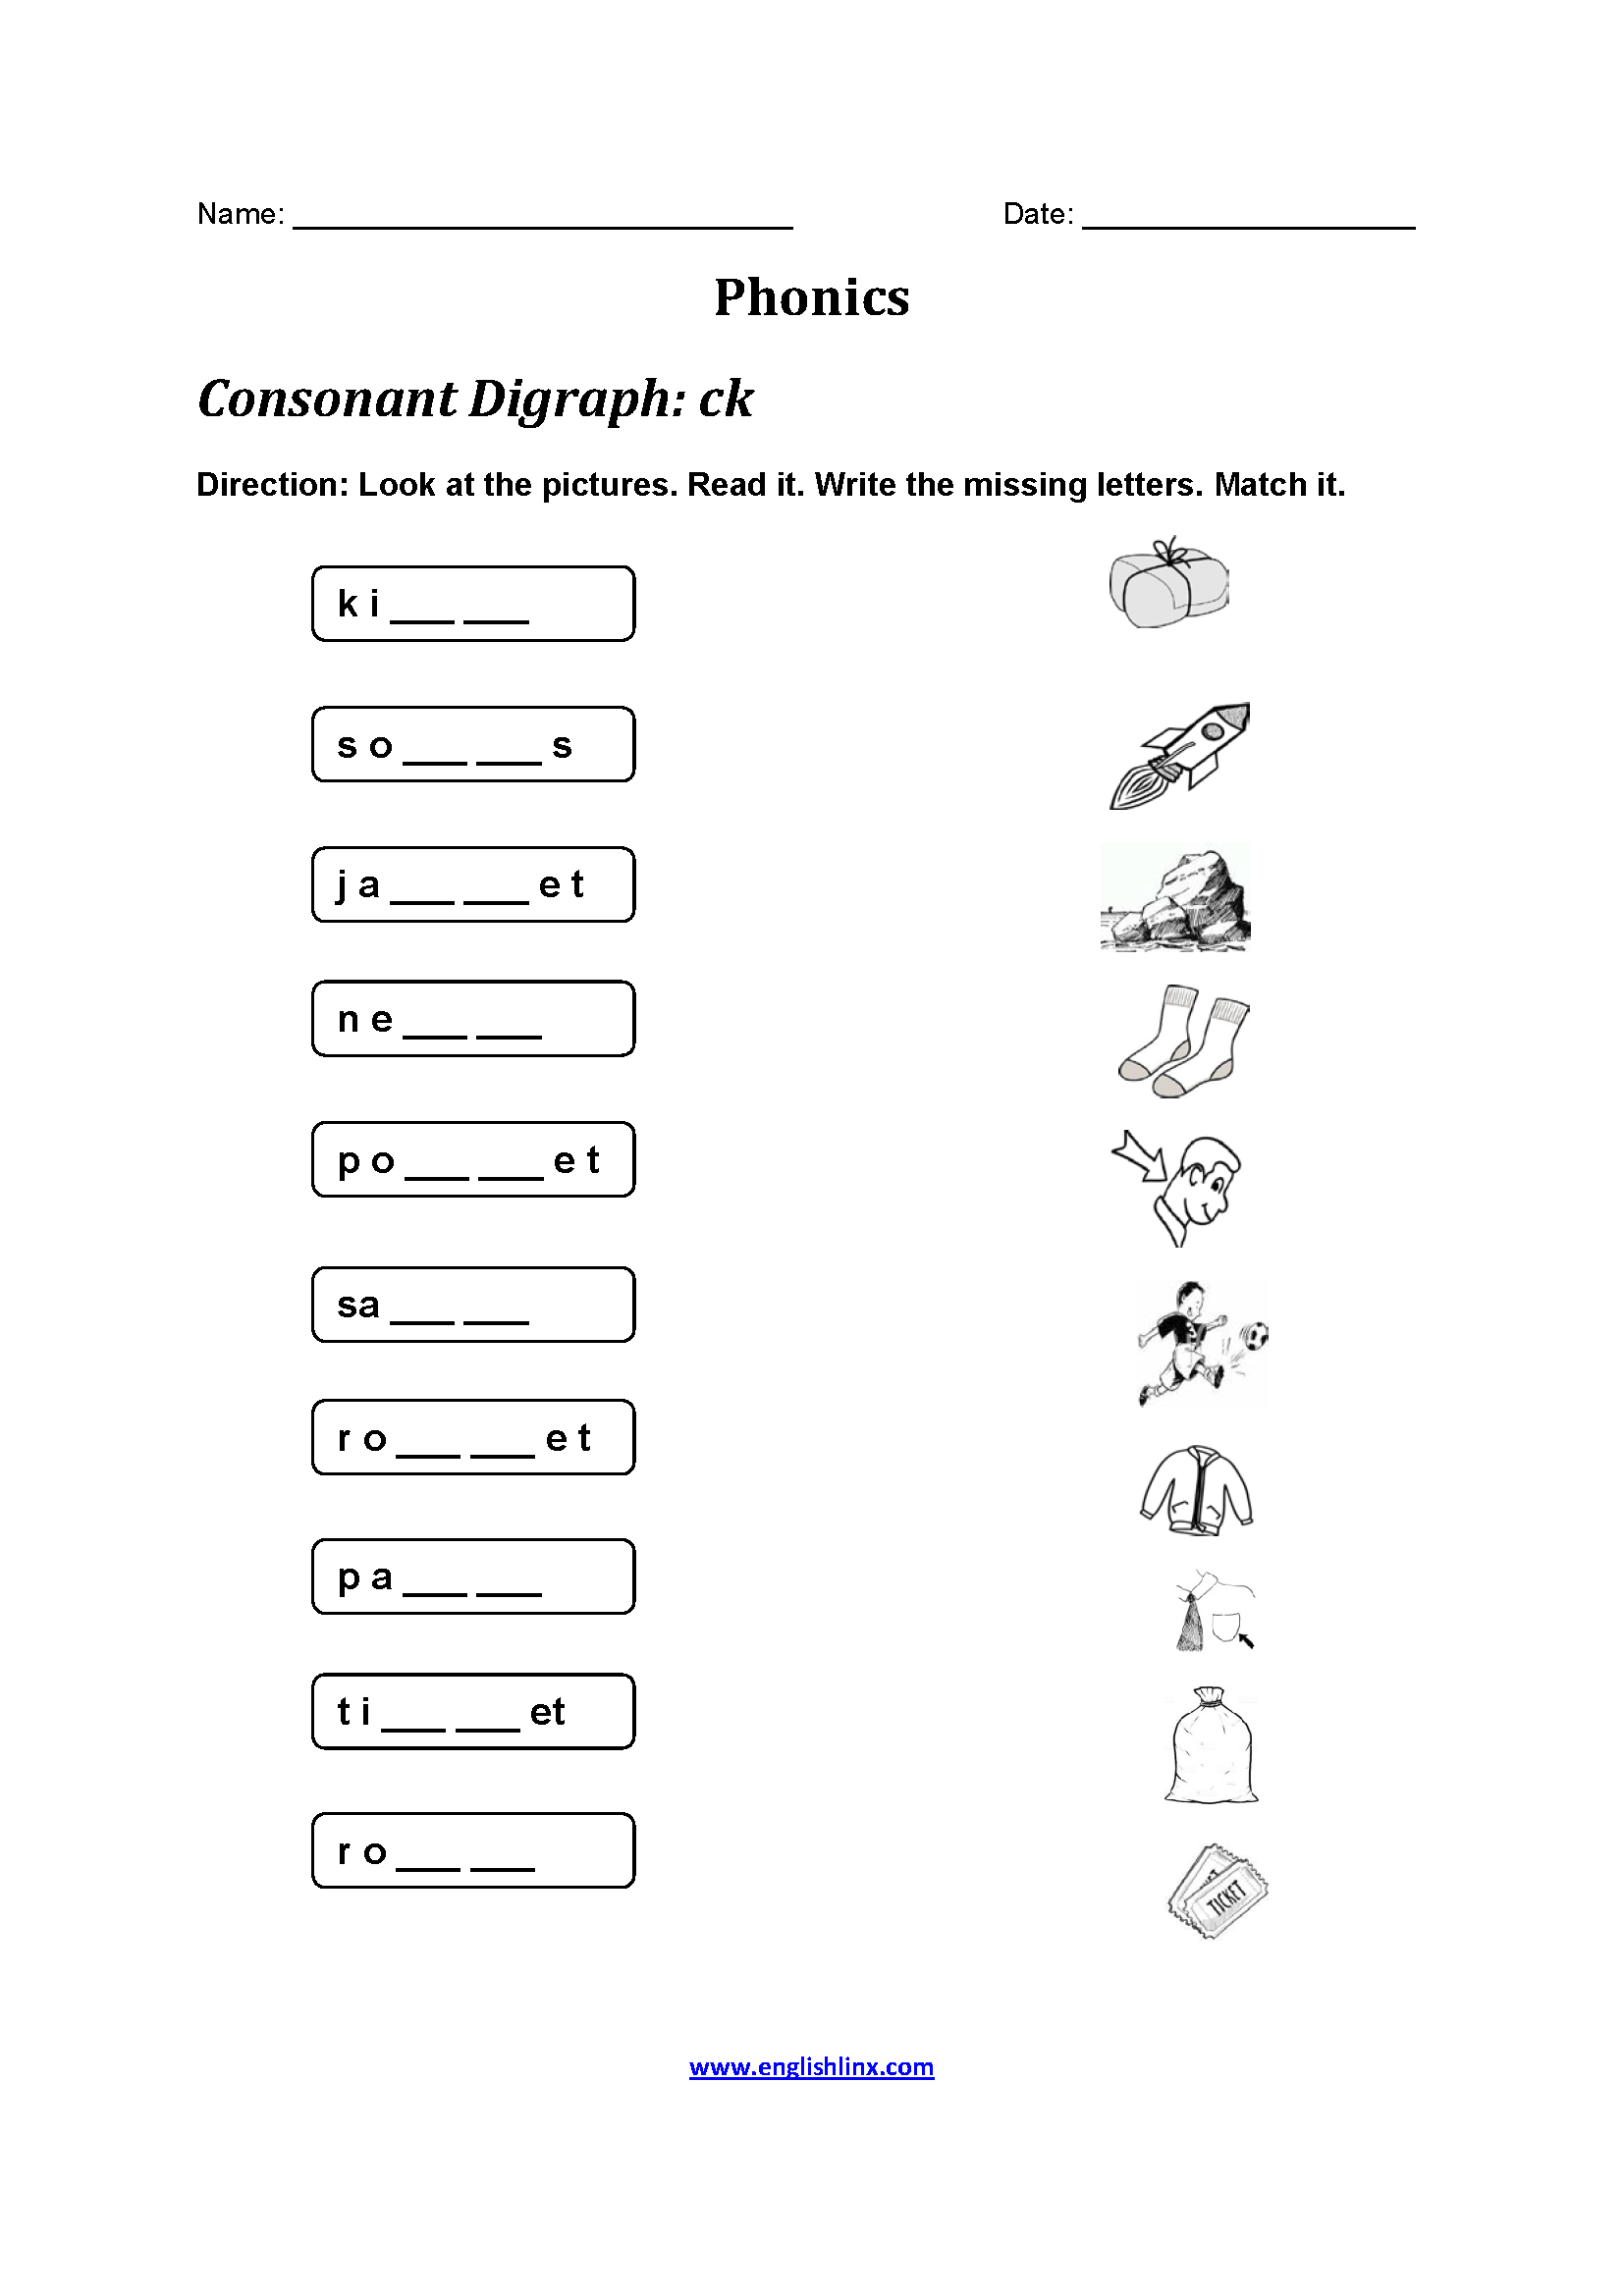 Consonant Diagraph CK Phonics Worksheets